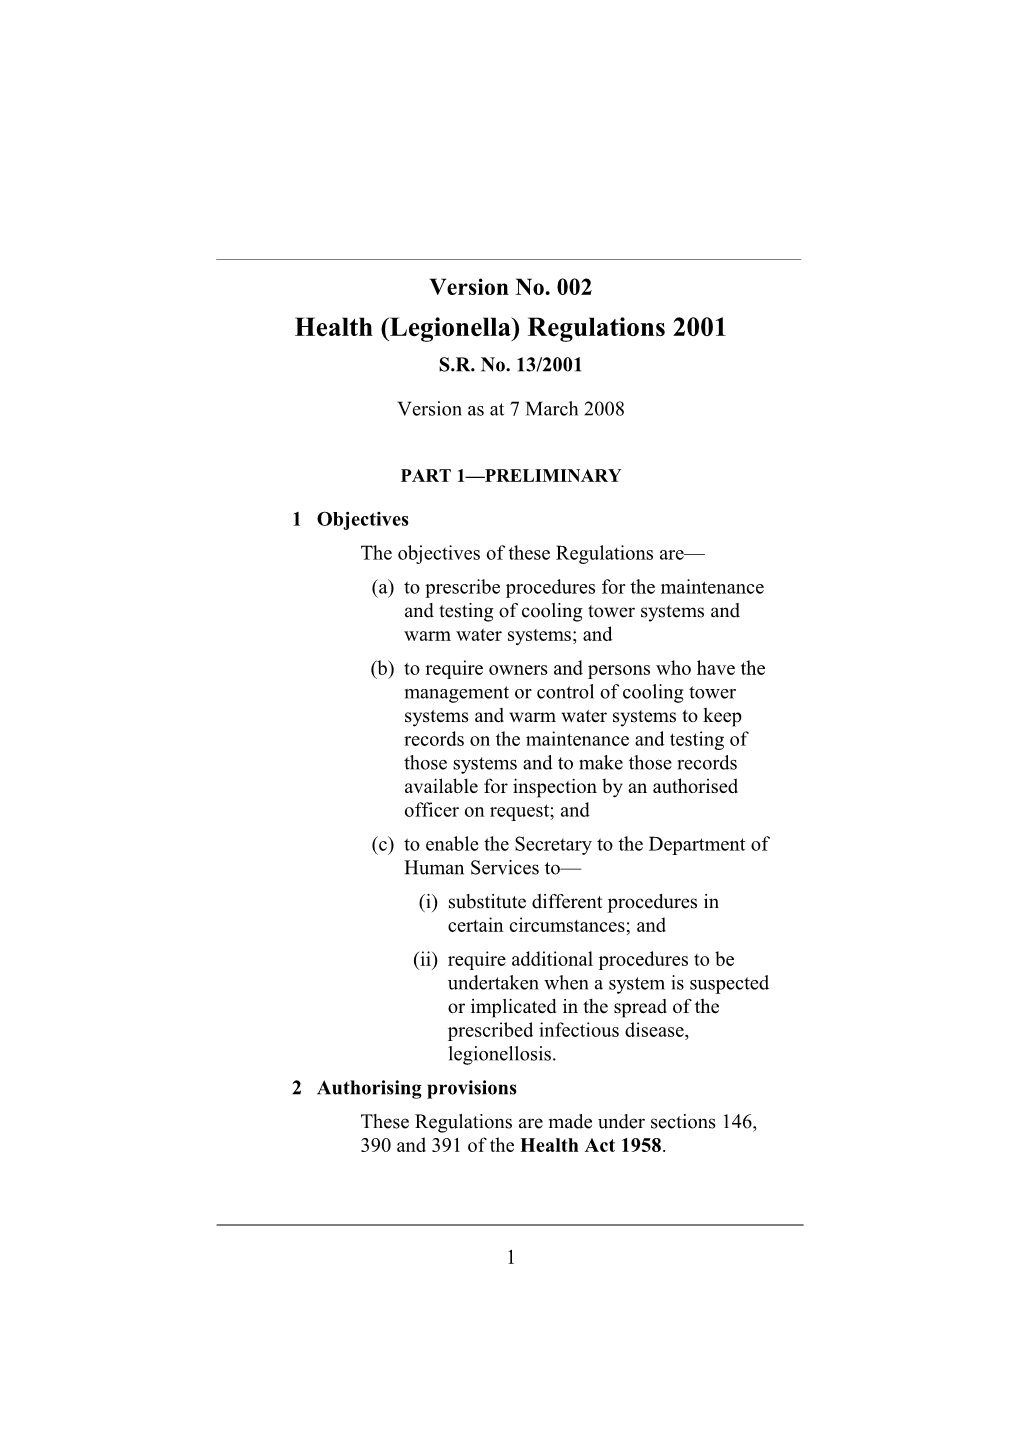 Health (Legionella) Regulations 2001